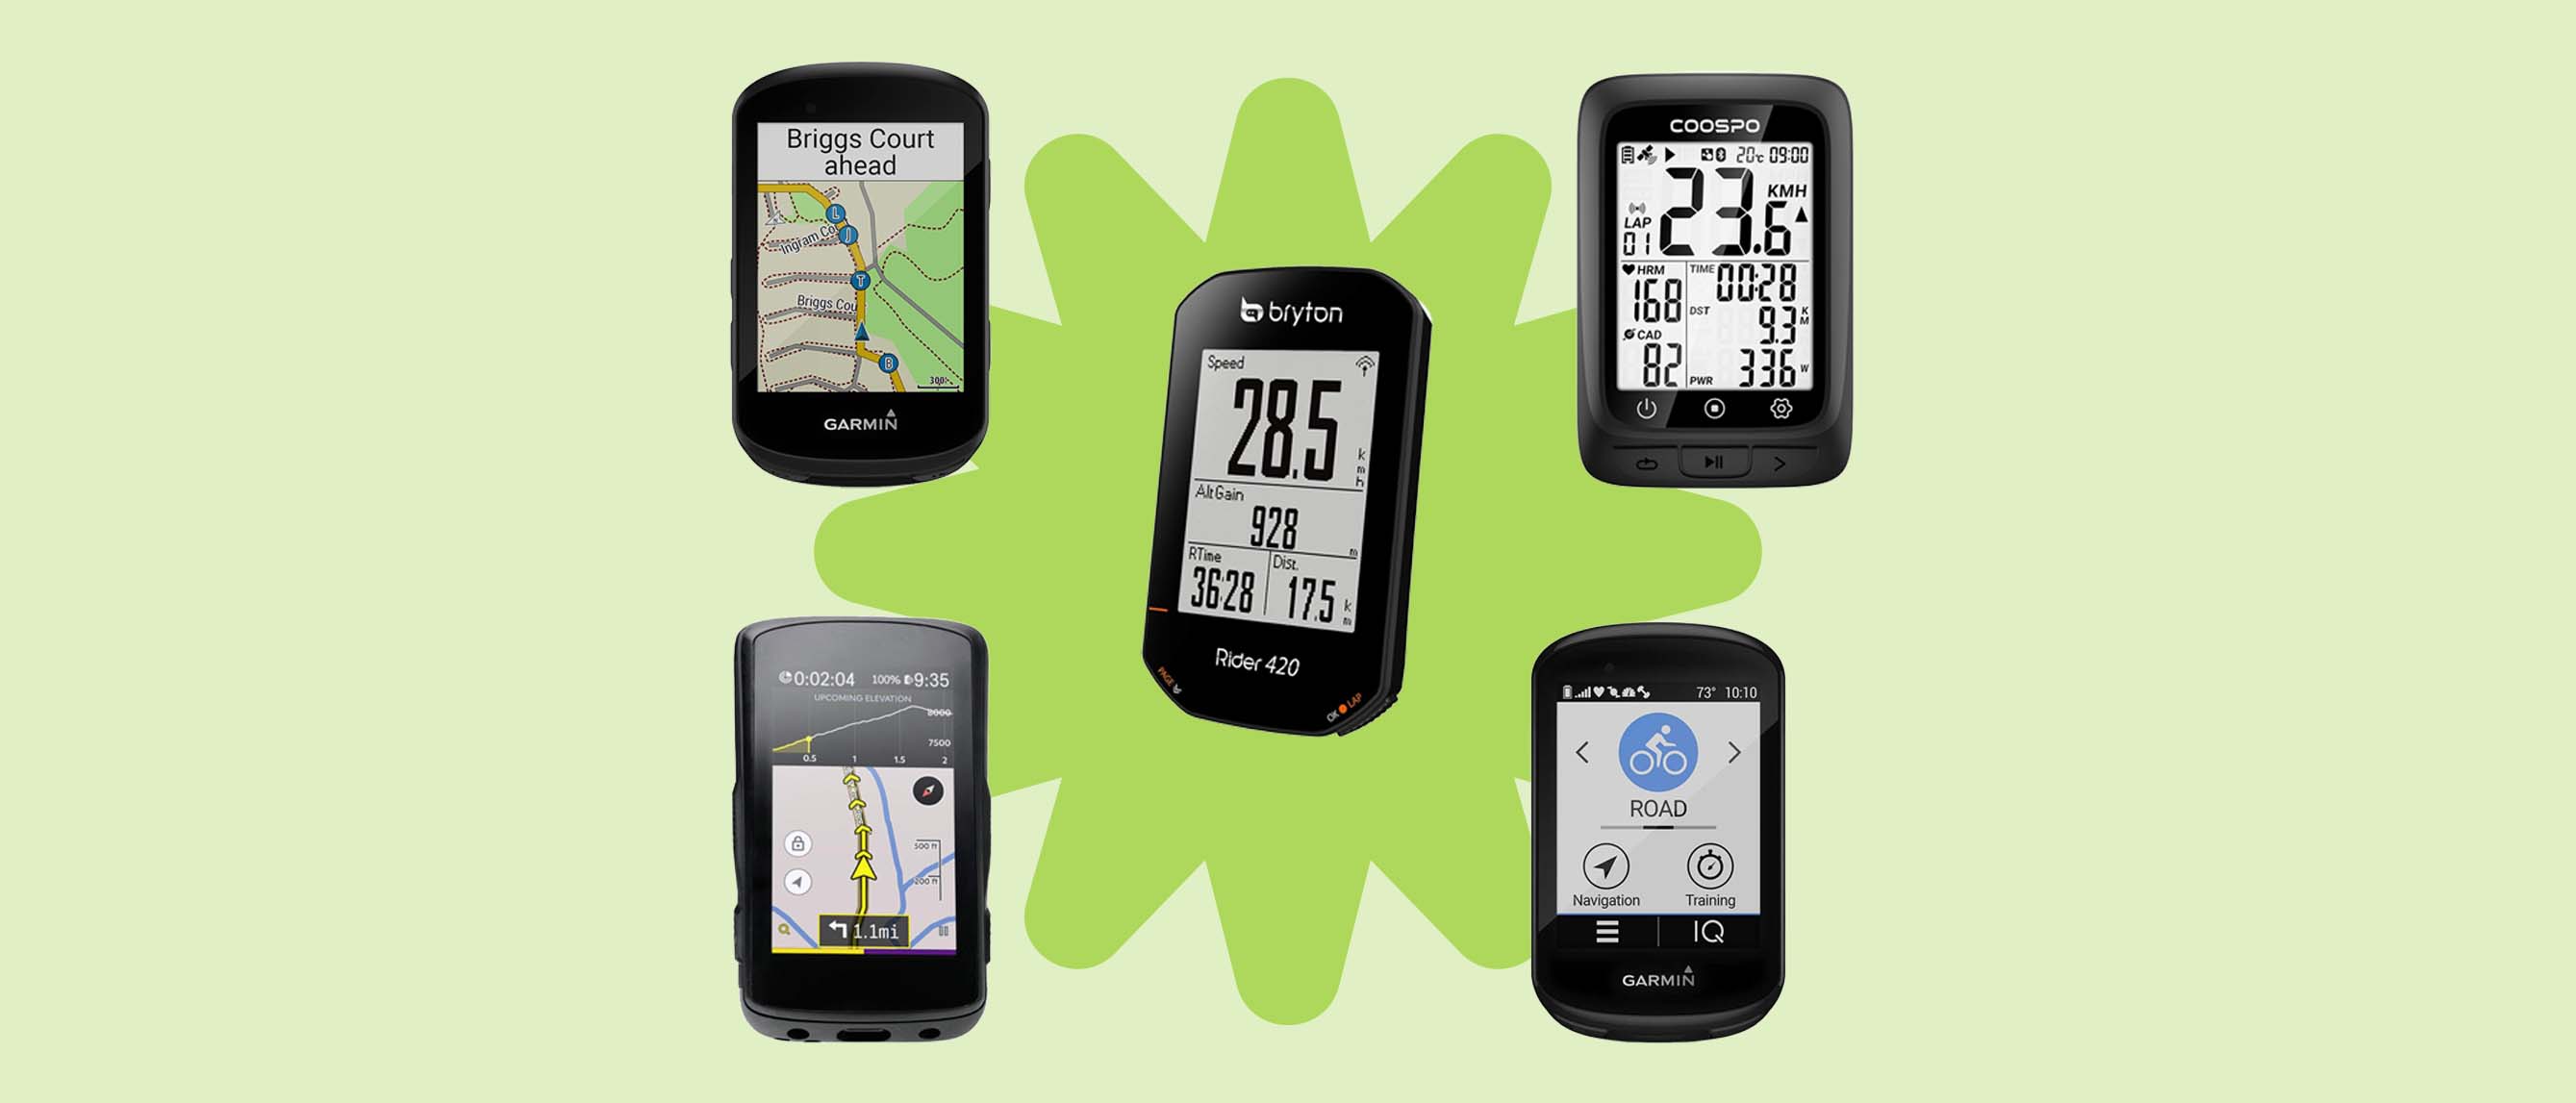 9 New Features in the Garmin Edge 830 - Premium GPS Bike Computer • Average  Joe Cyclist